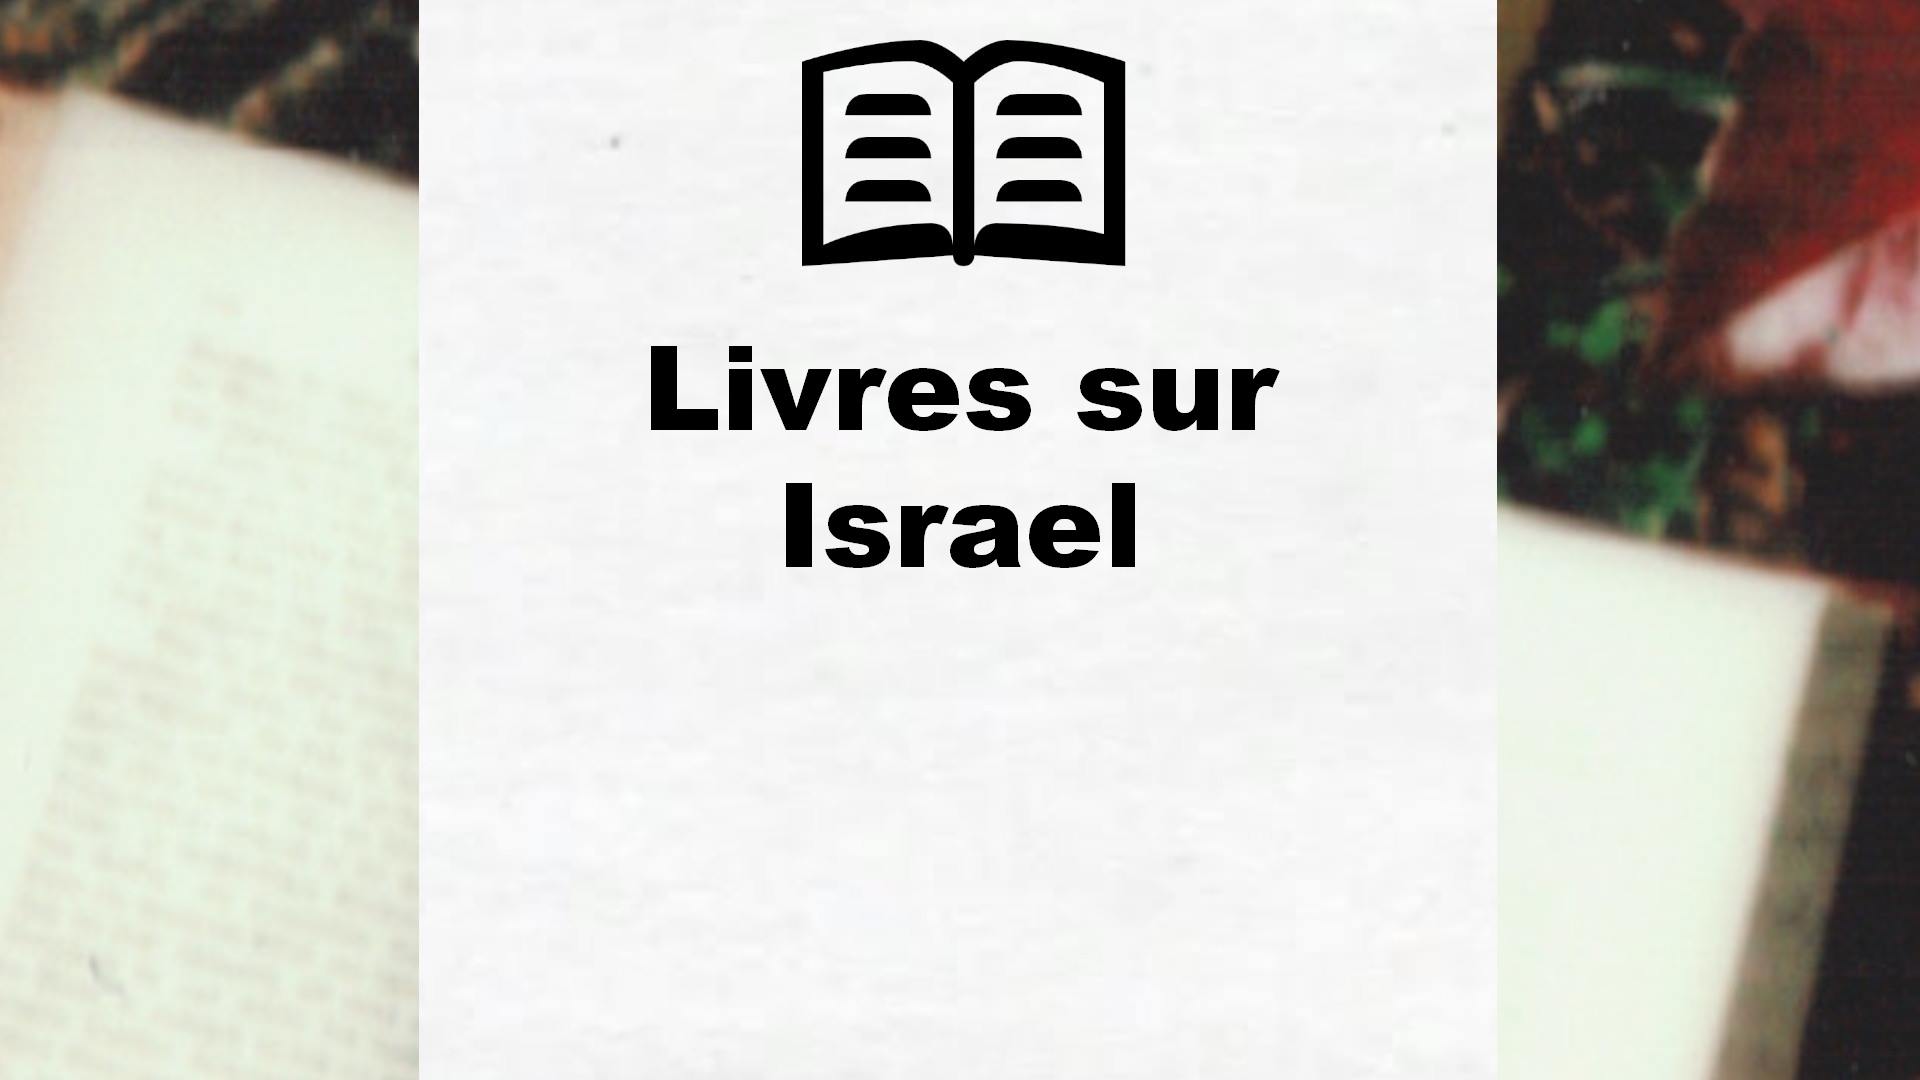 Livres sur Israel